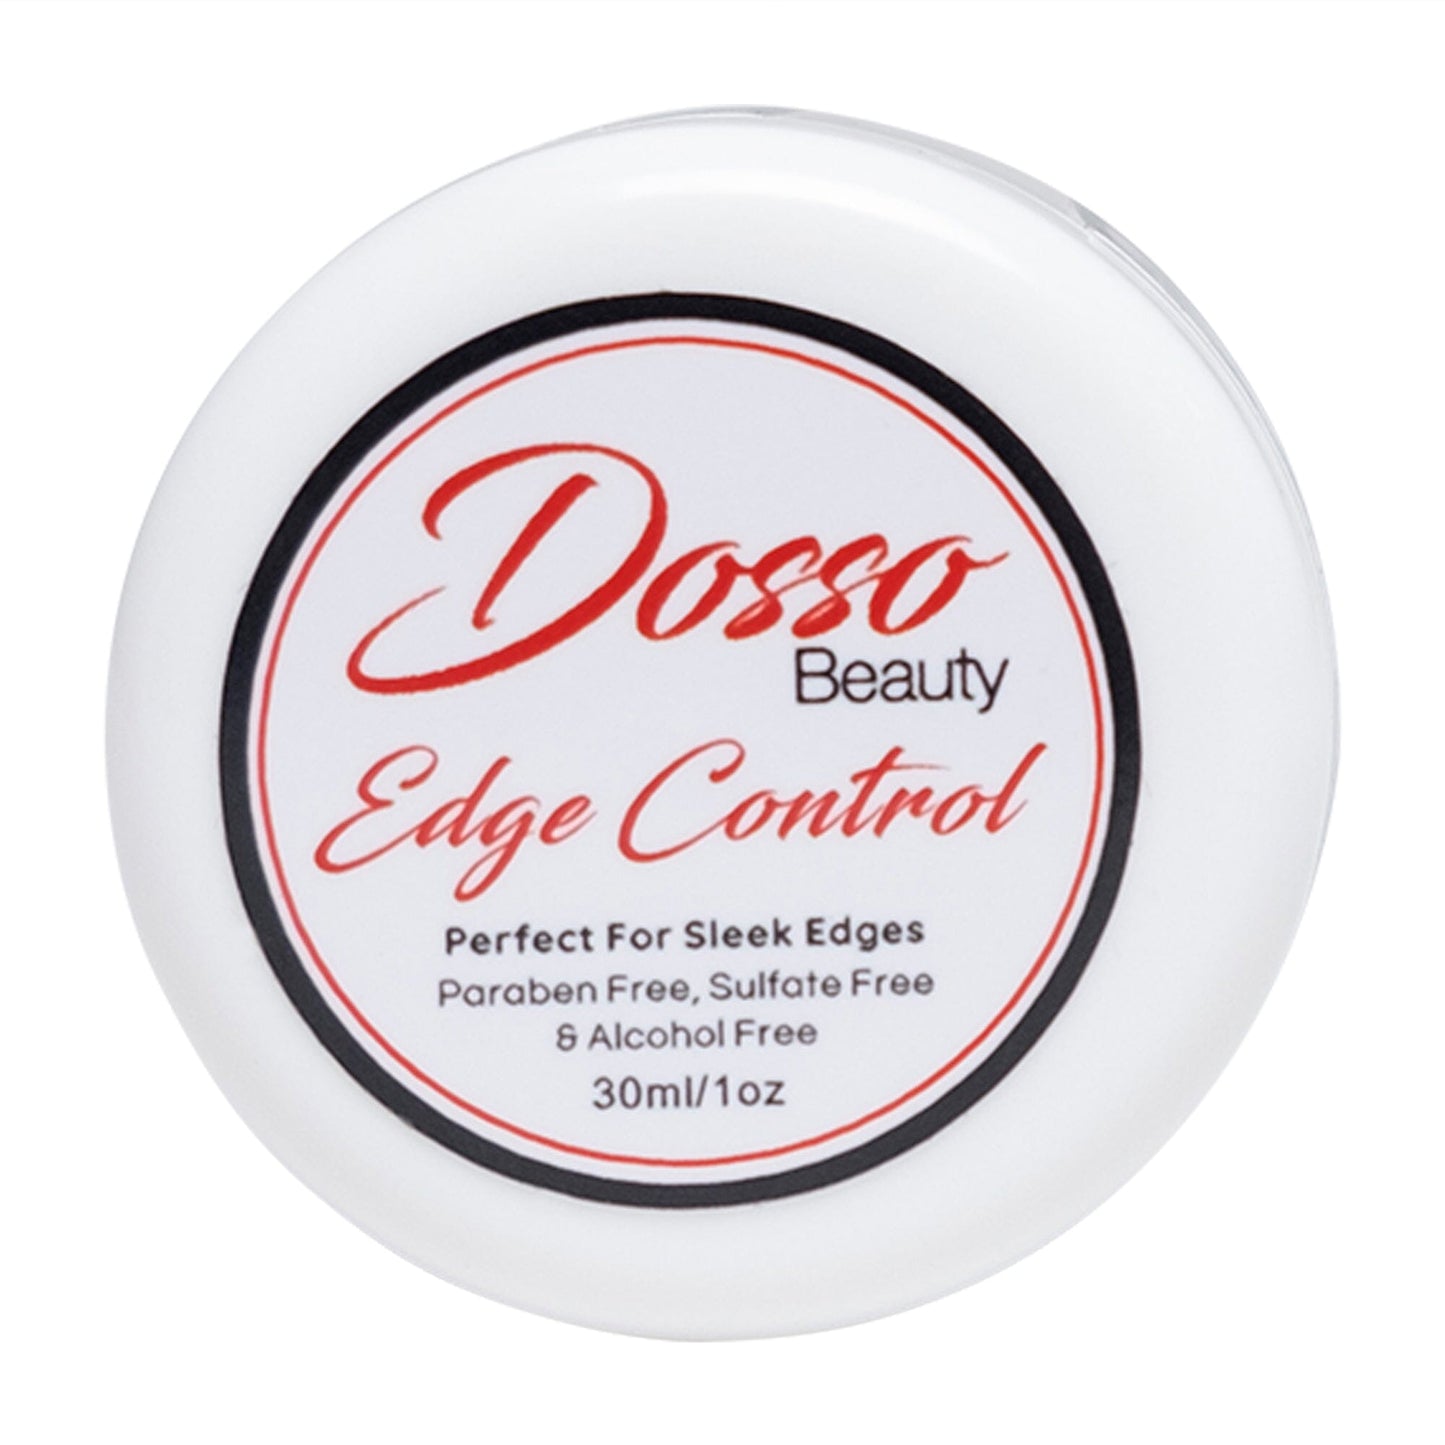 Organic Edge Control Hair Products DossoBeauty 1 oz 